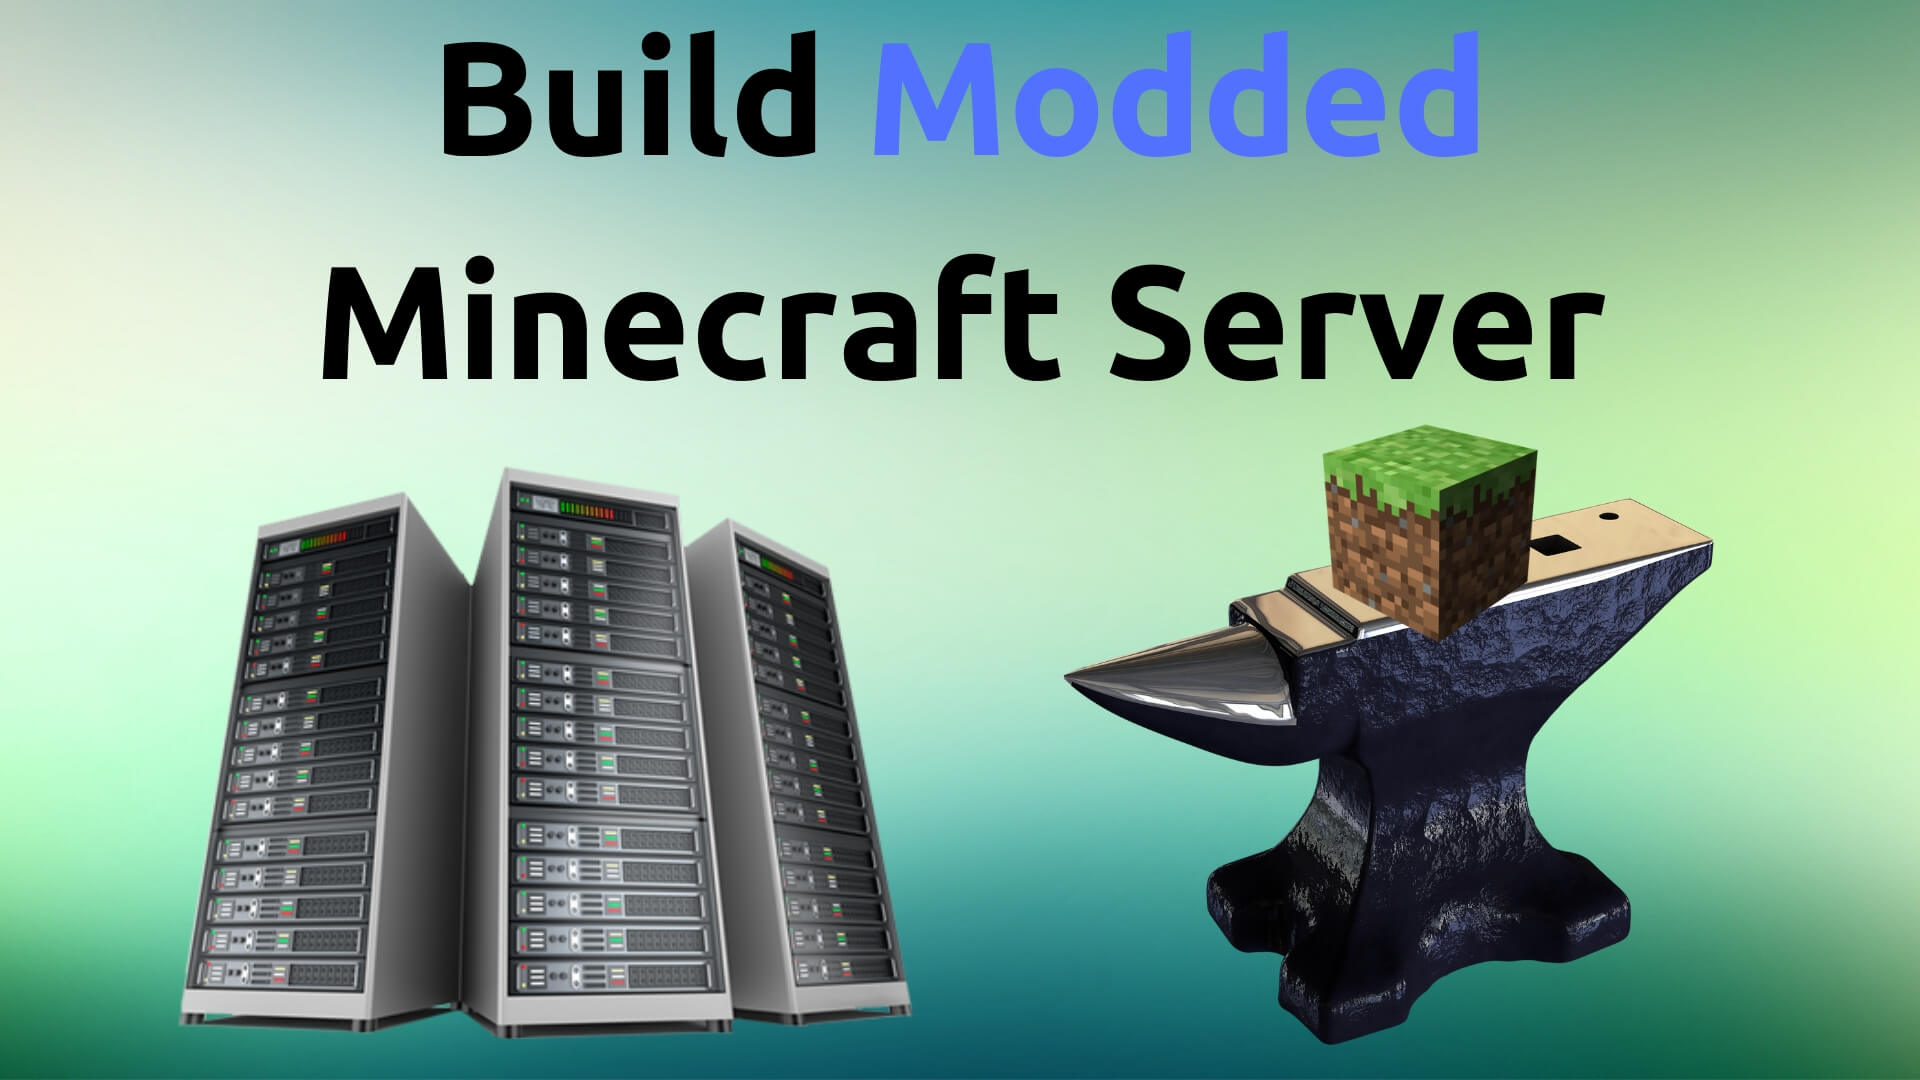 host a modded minecraft server